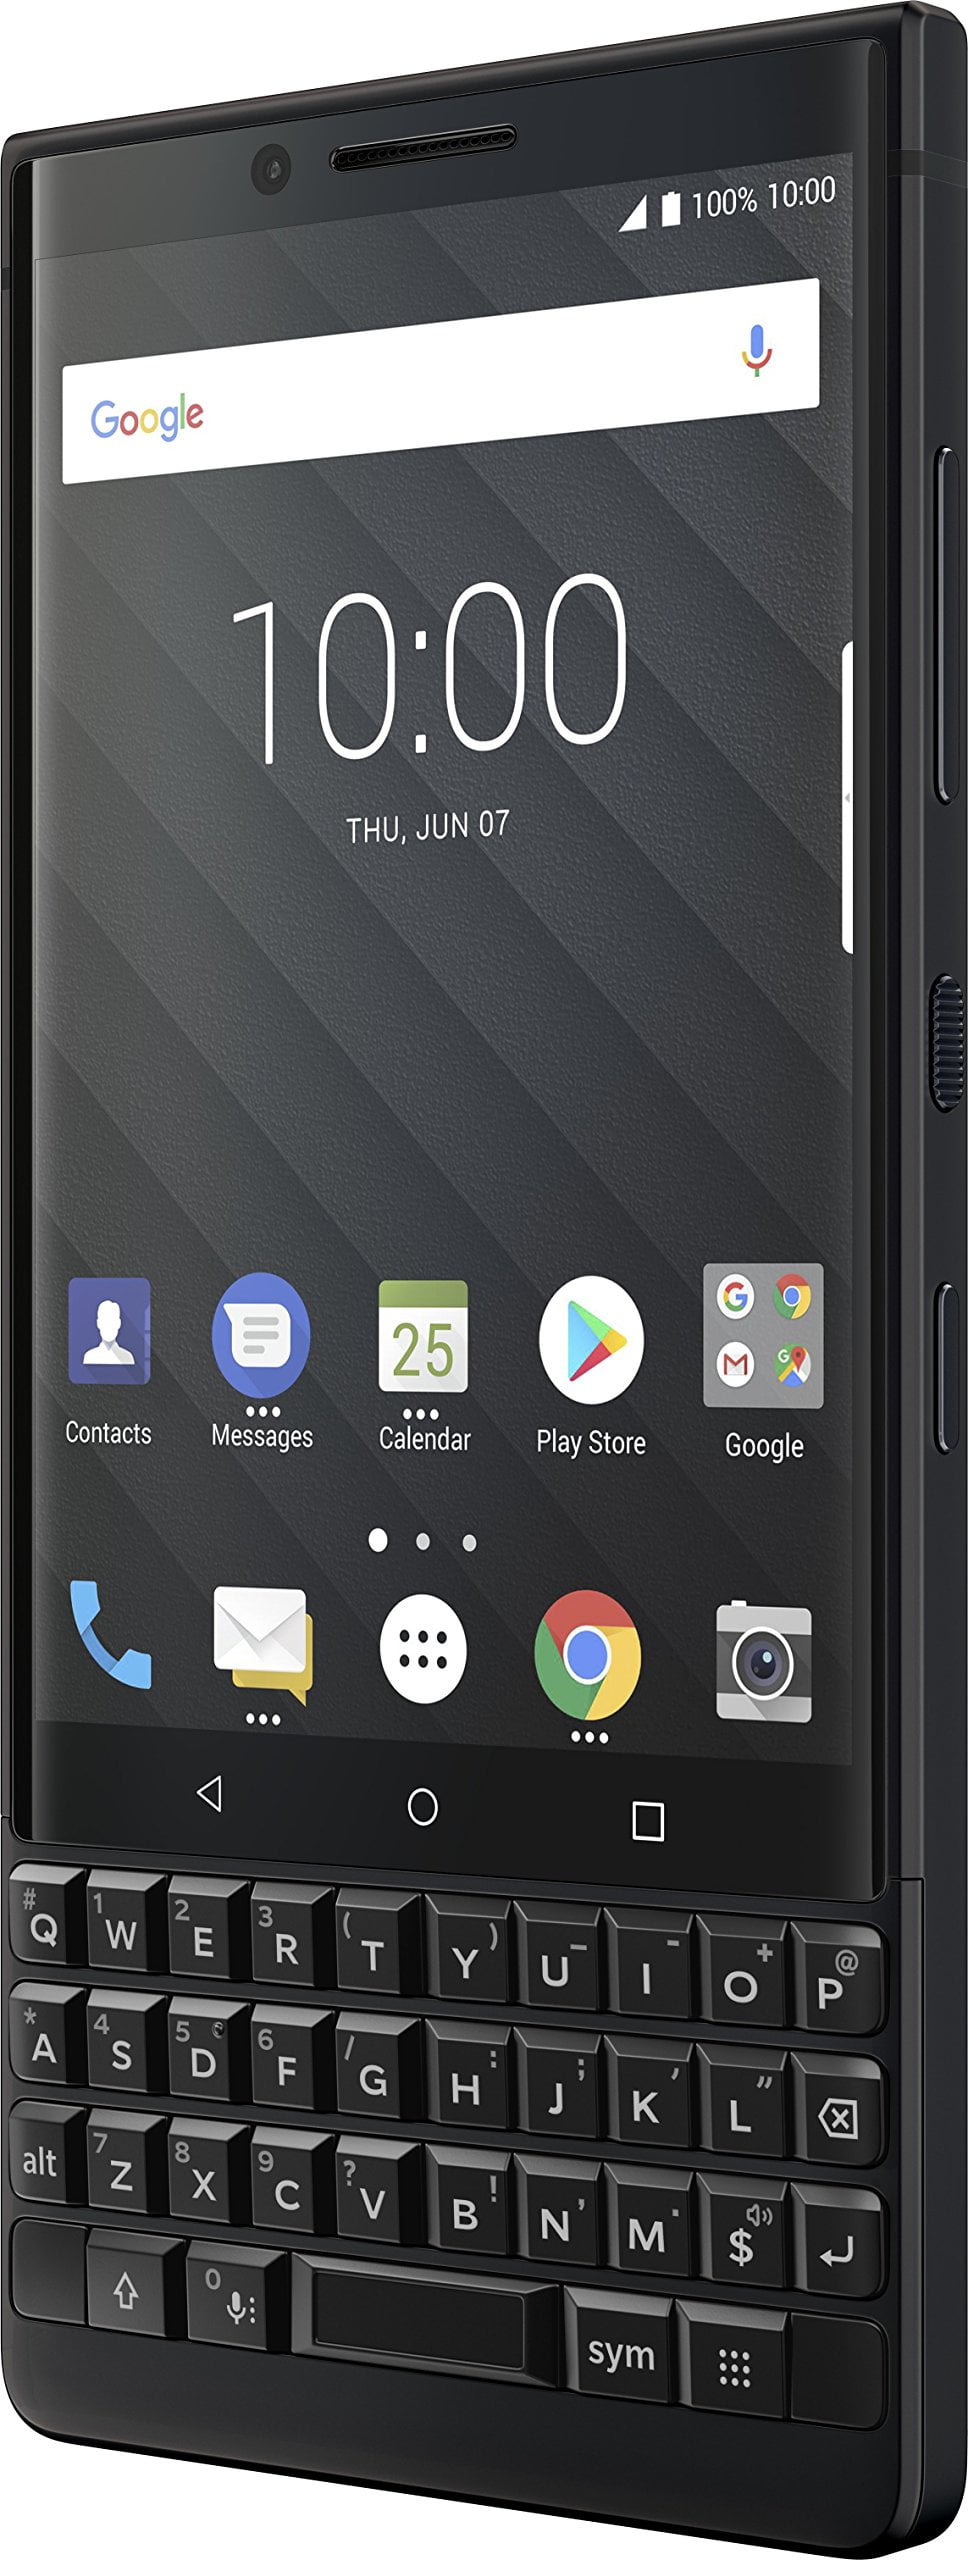 BlackBerry KEY2 Black Unlocked Android Smartphone (ATu0026T/T-Mobile) 4G LTE